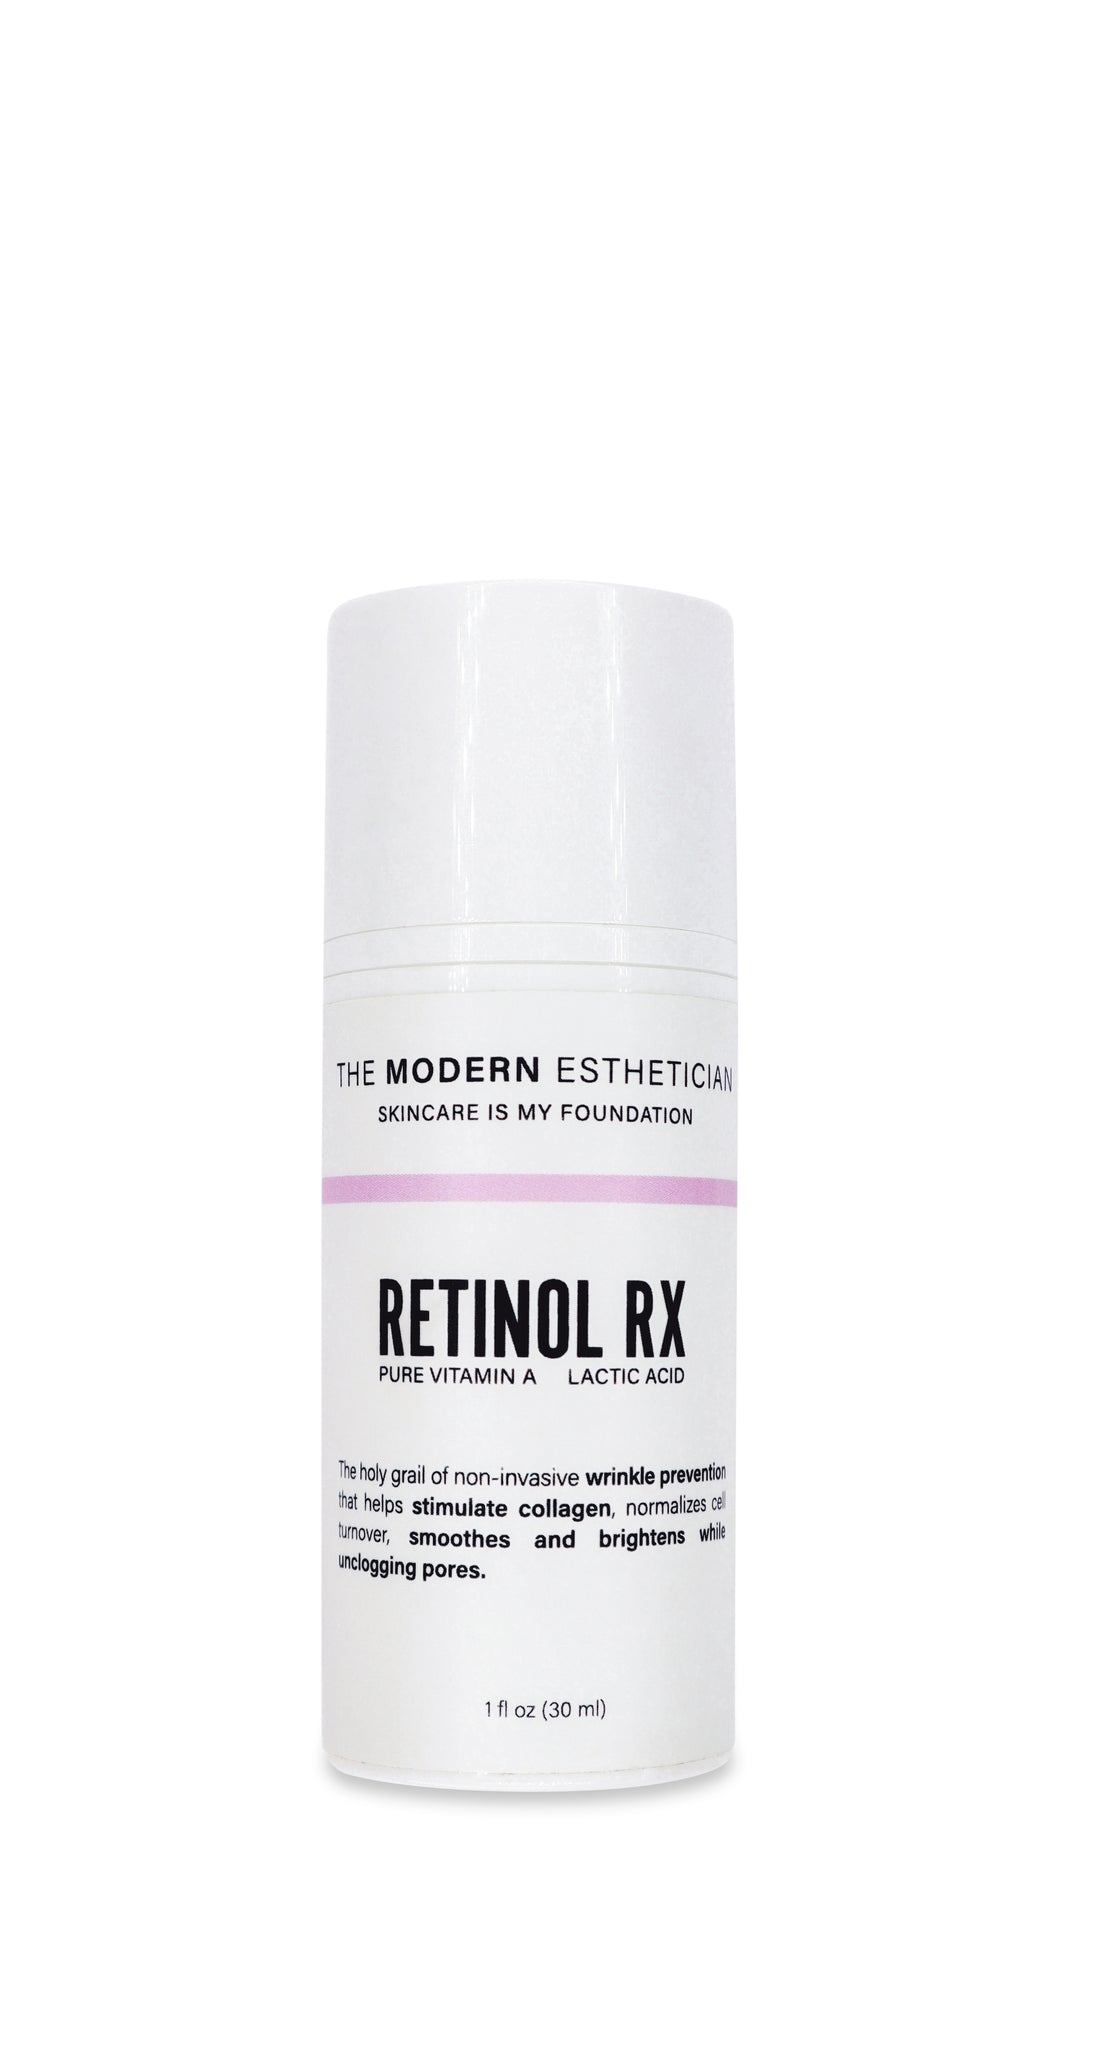 Retinol RX by The Modern Esthetician